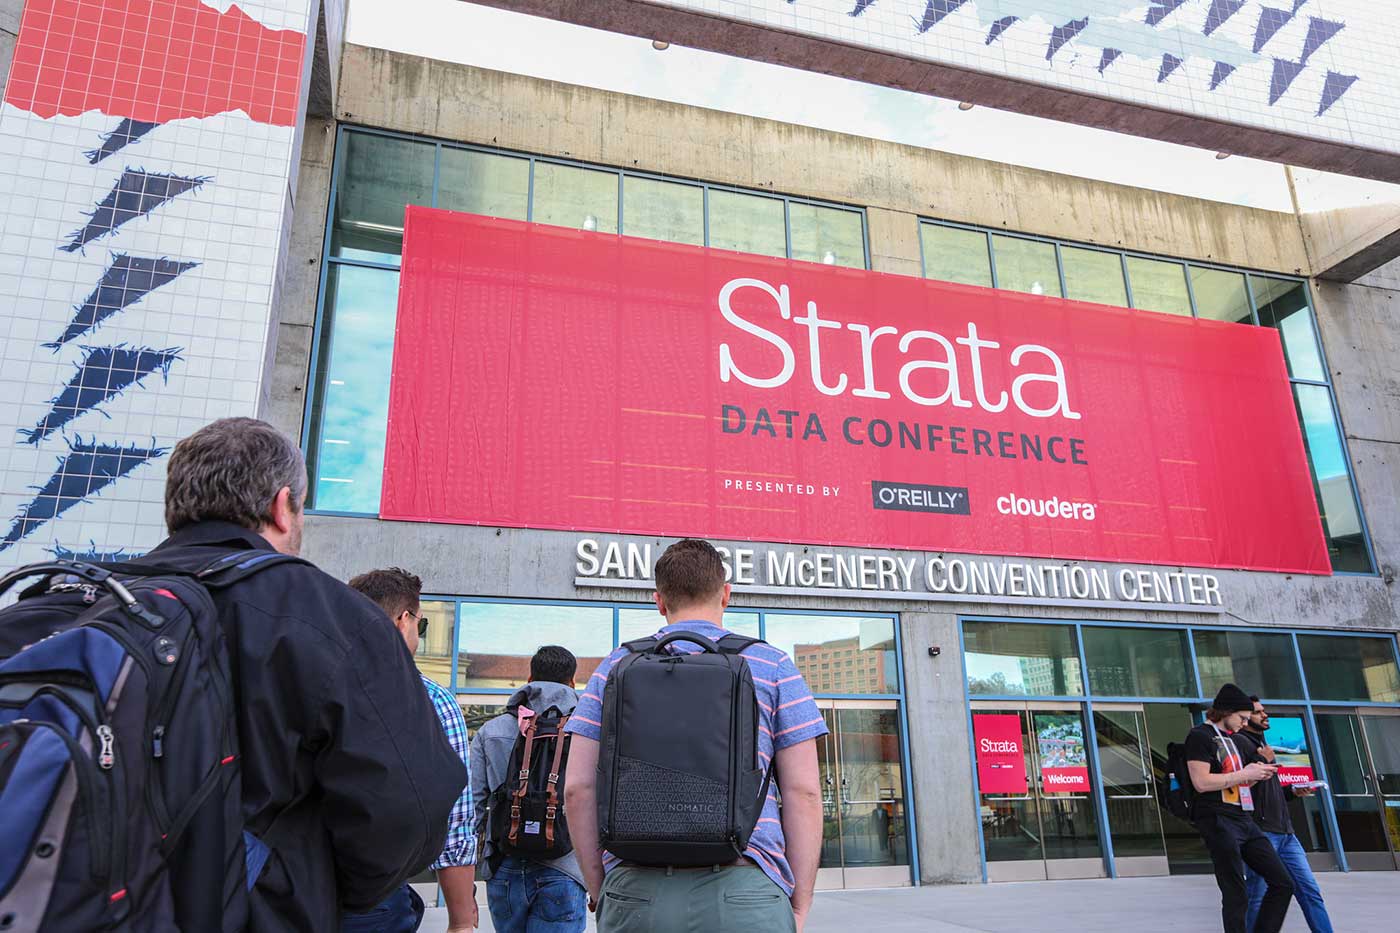 Strata Data Conference 2018 in San Jose